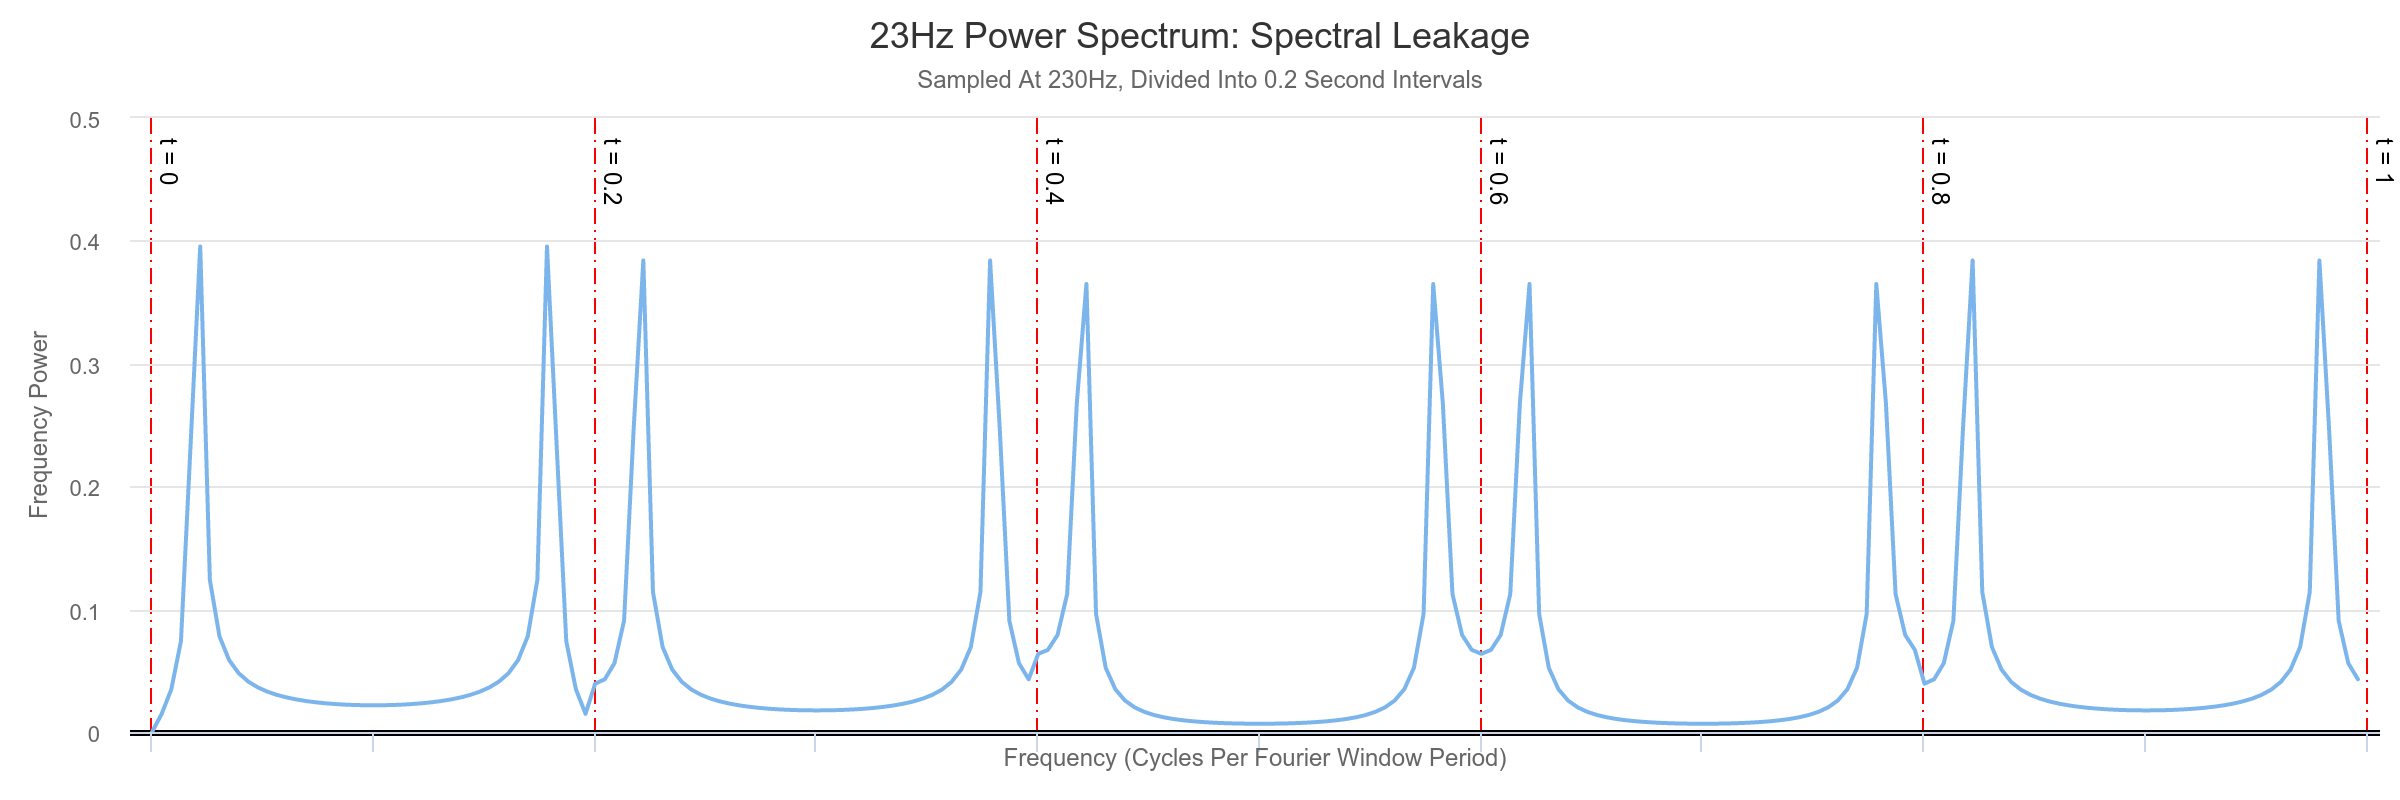 23hz Spectral Leakage